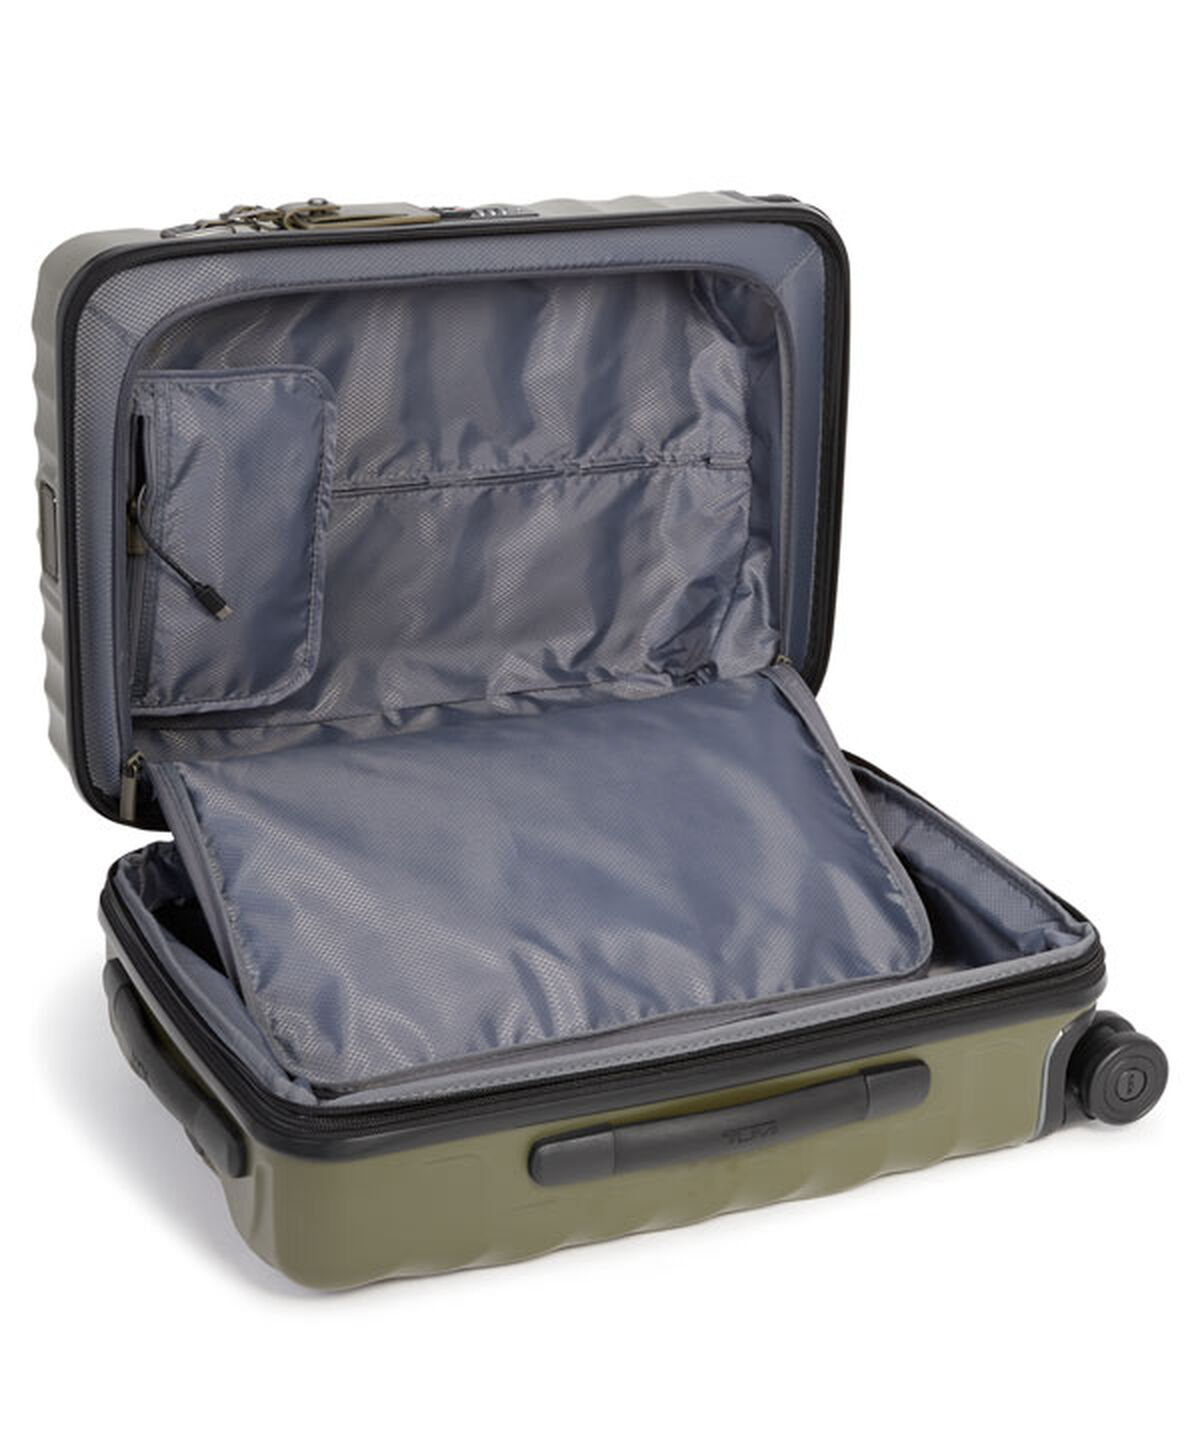 TUMI 19 DEGREE International Expandable Carry-On 55 cm Olive Texture